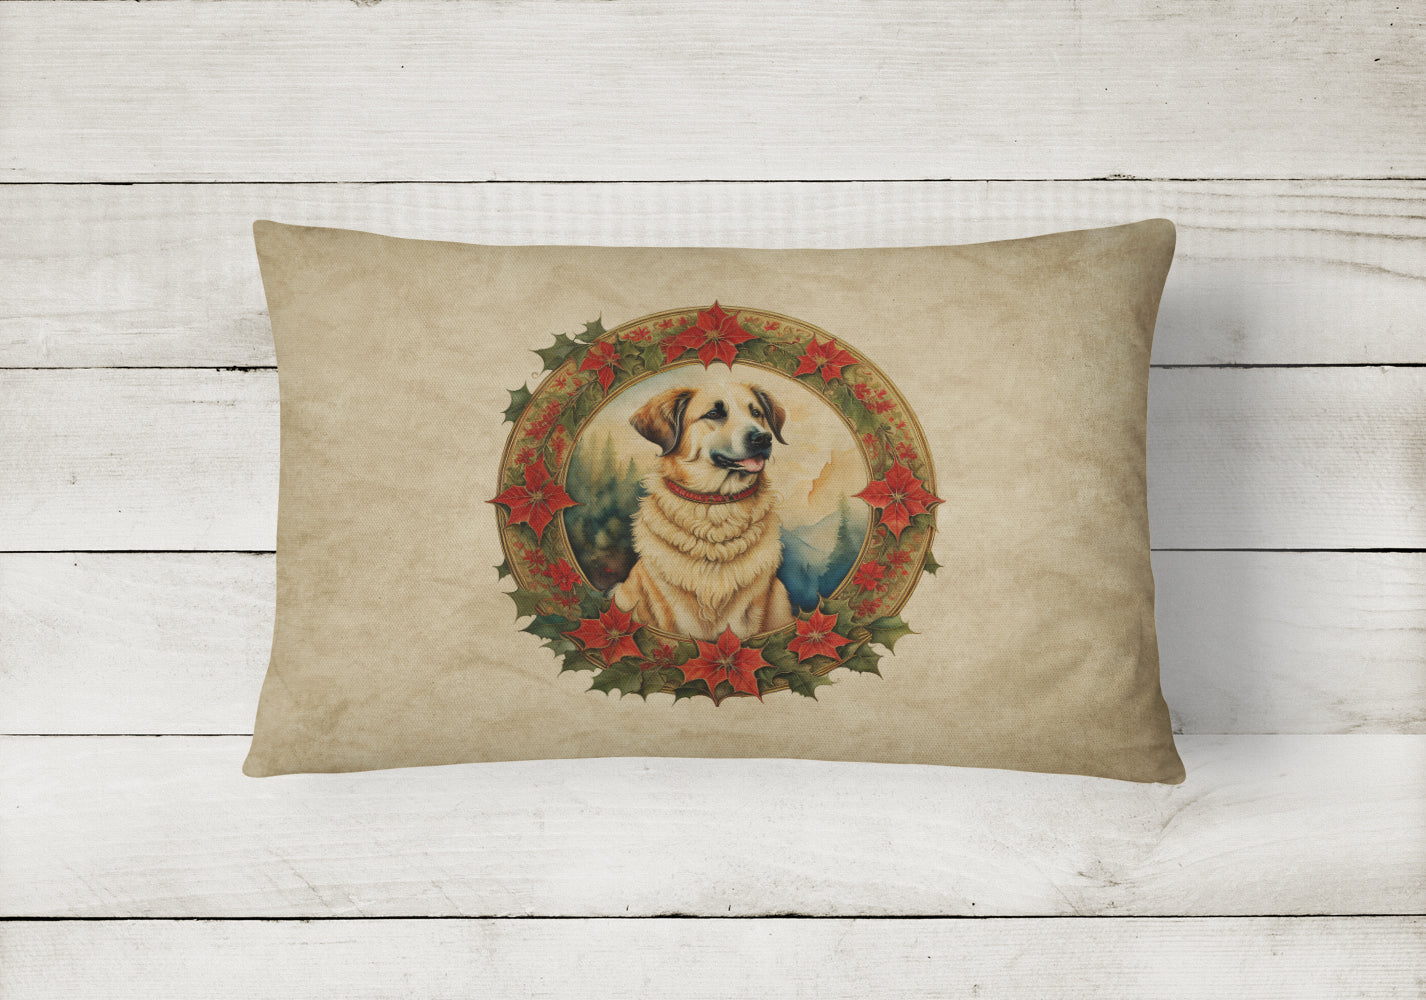 Buy this Anatolian Shepherd Dog Christmas Flowers Throw Pillow